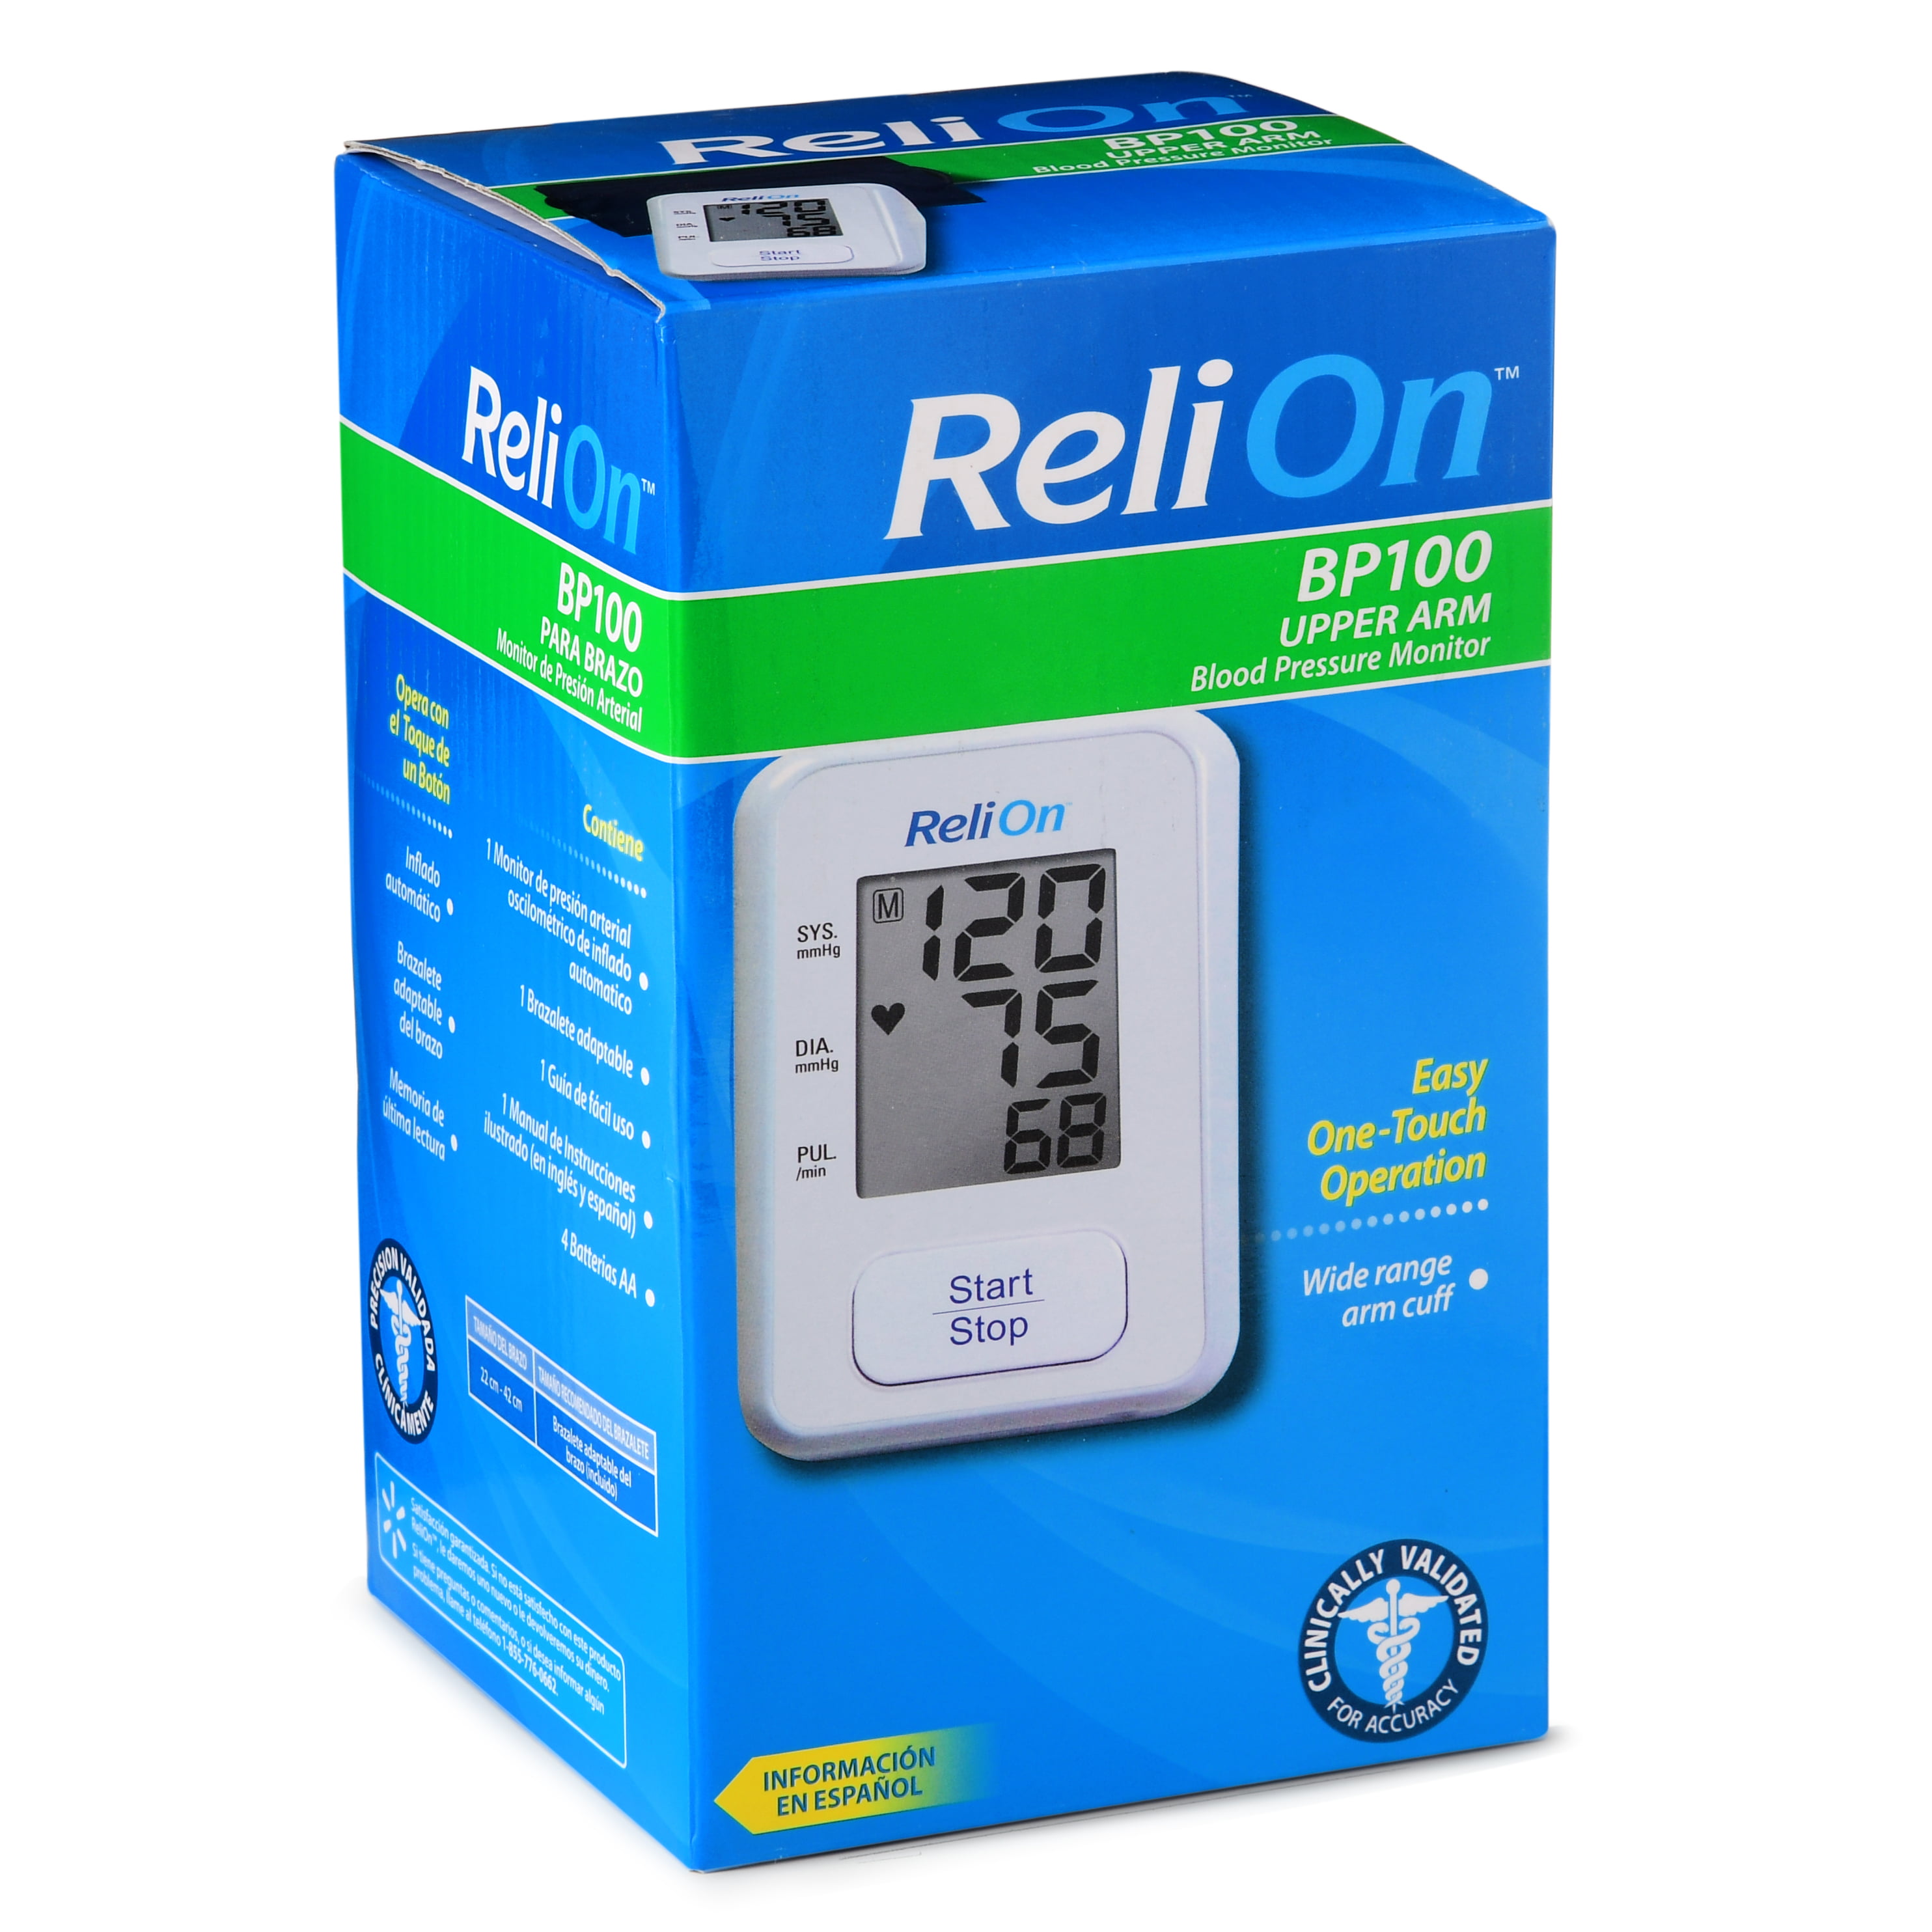 ReliOn BP100 Upper Arm Automatic Blood Pressure Monitor 605388043863 | eBay